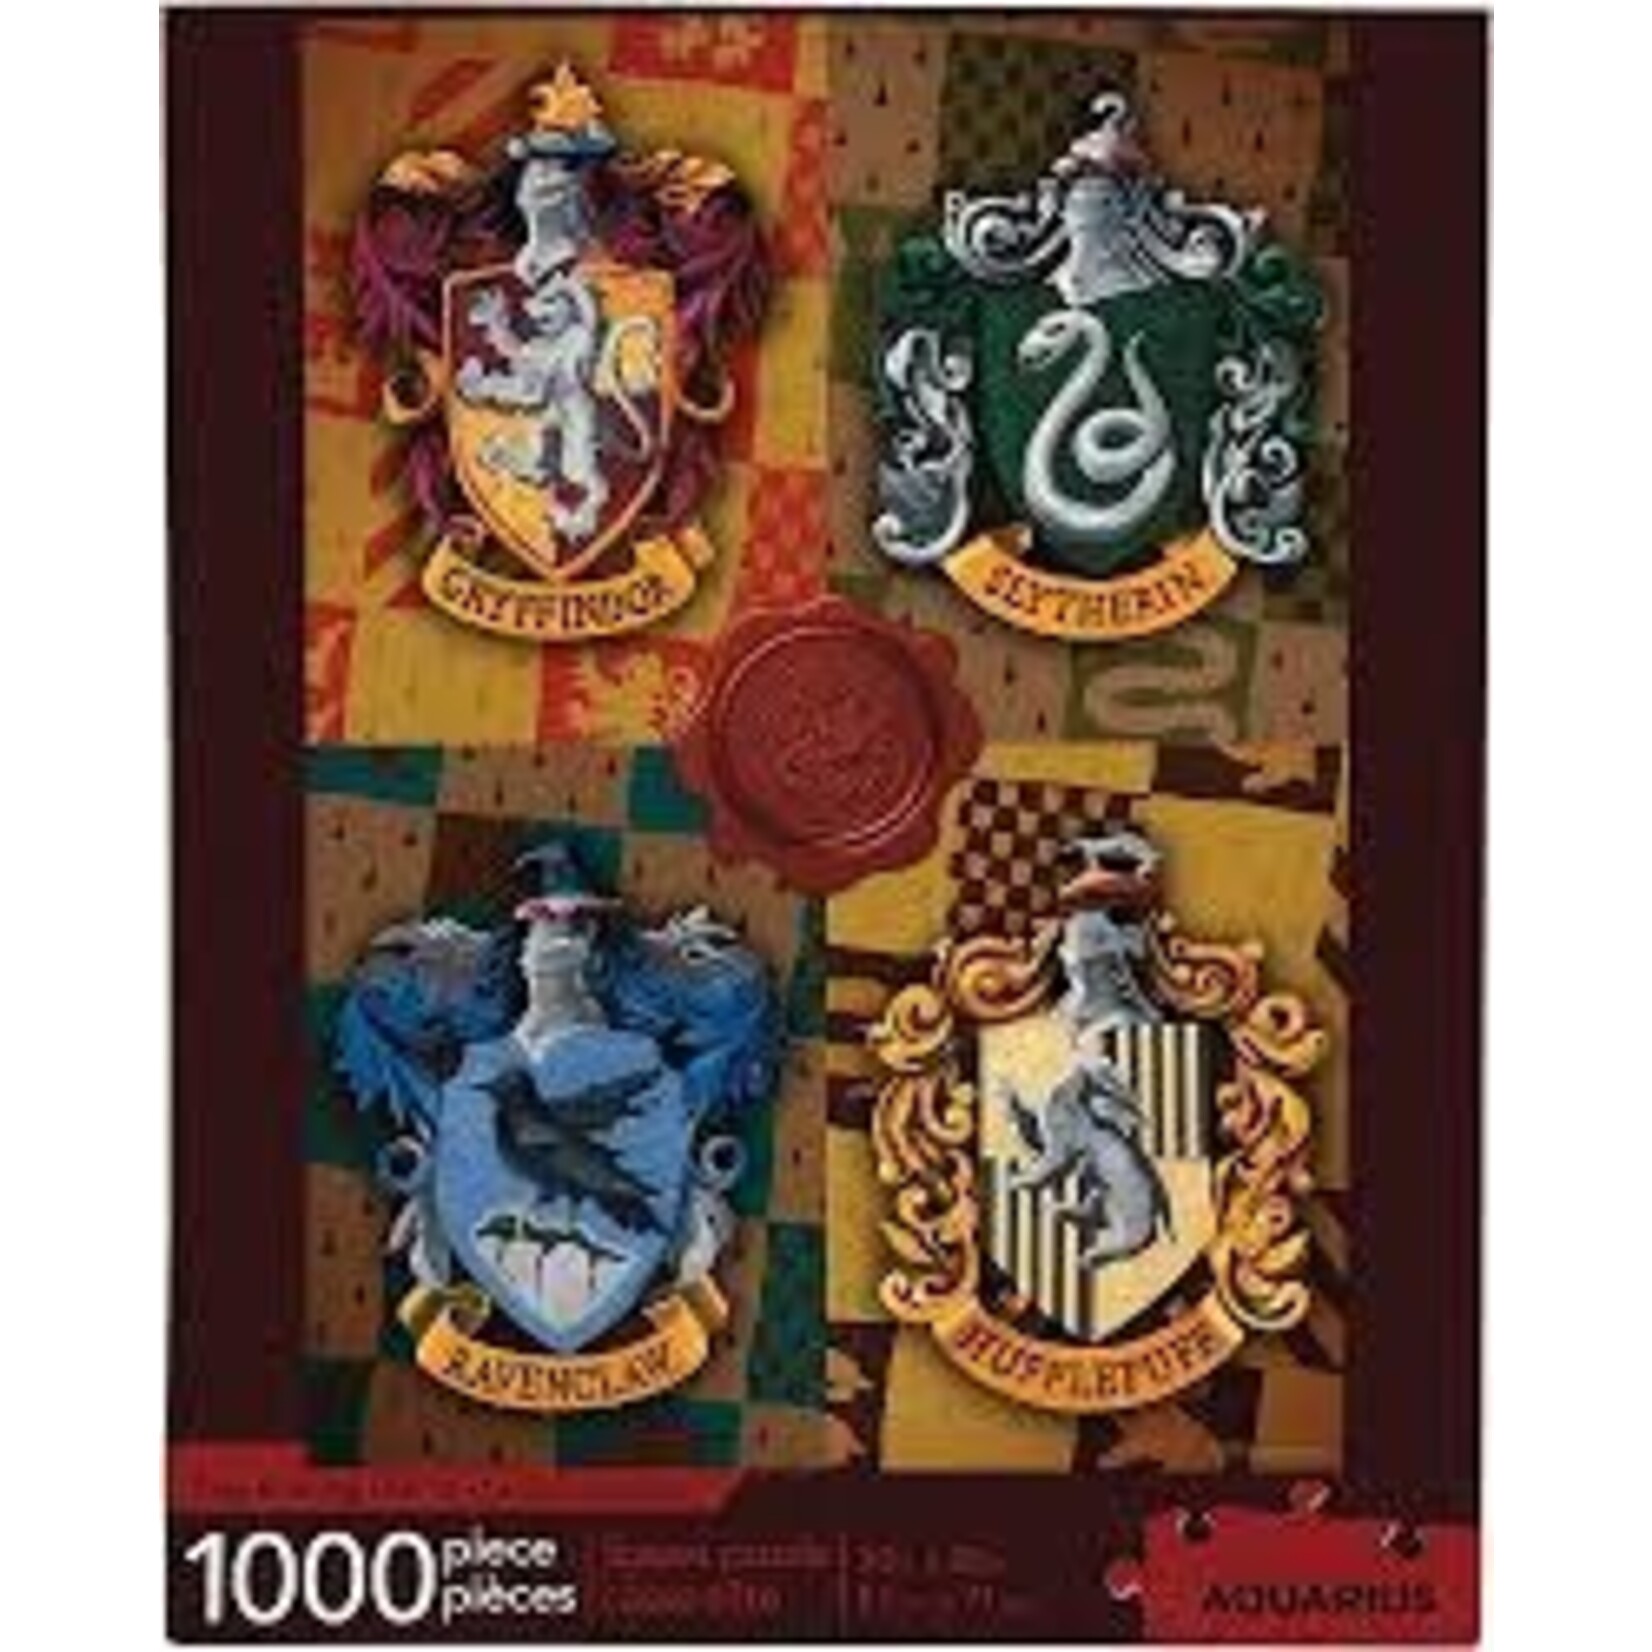 Aquarius AQU65303 Harry Potter Crests (Puzzle1000)